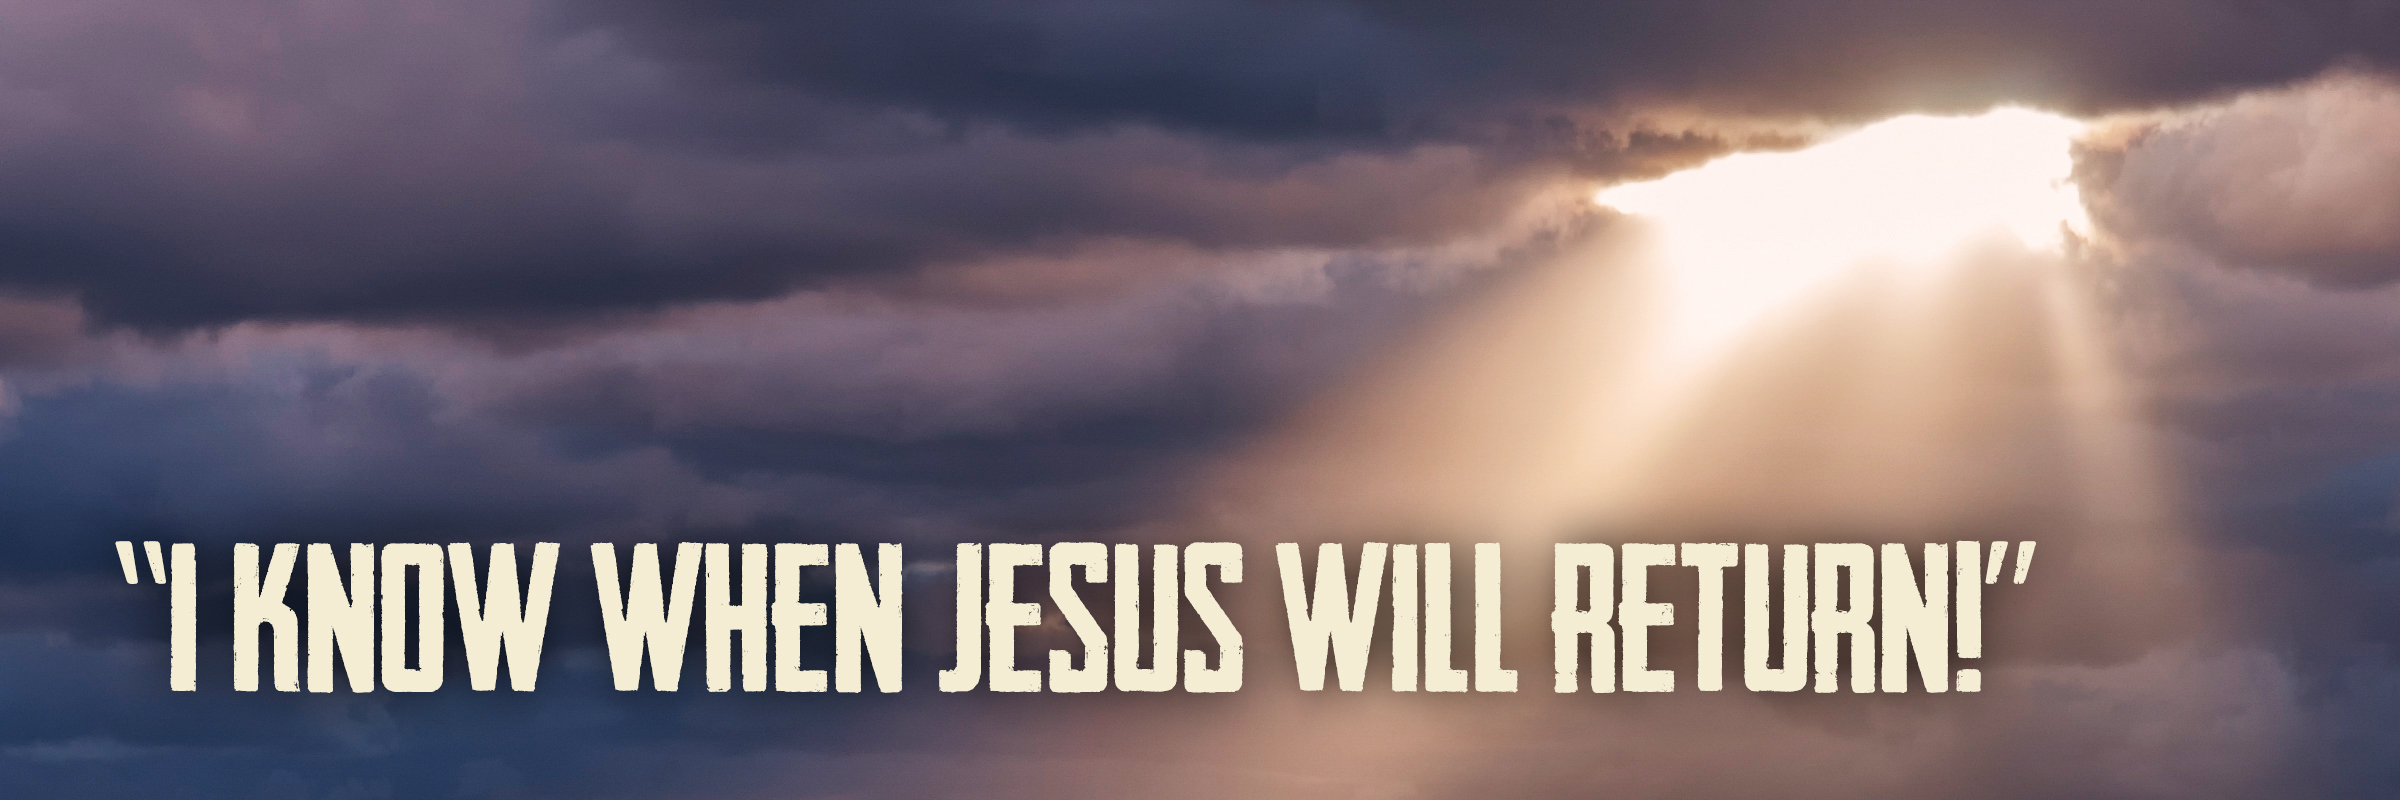 I know when Jesus will return!